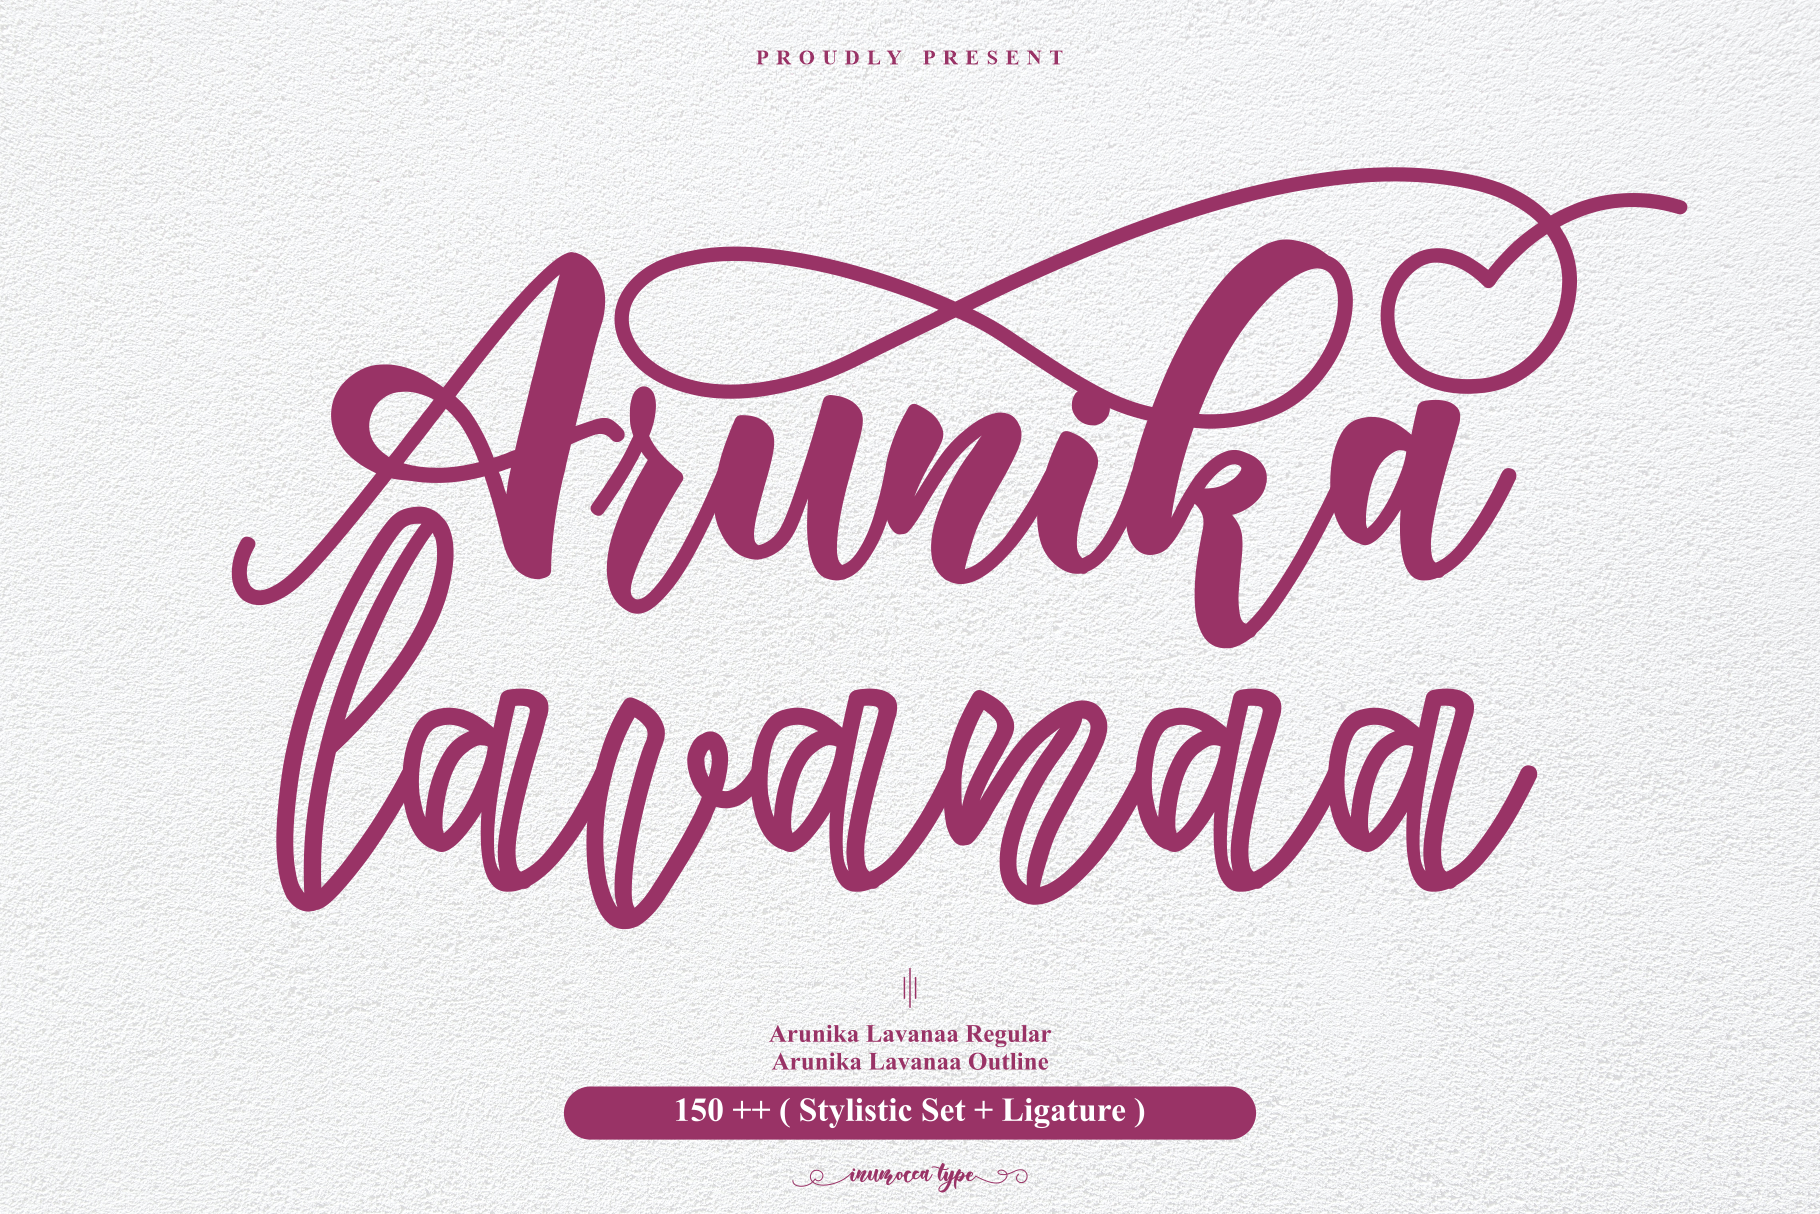 arunika lavanaa modern and stylish handwritten font.